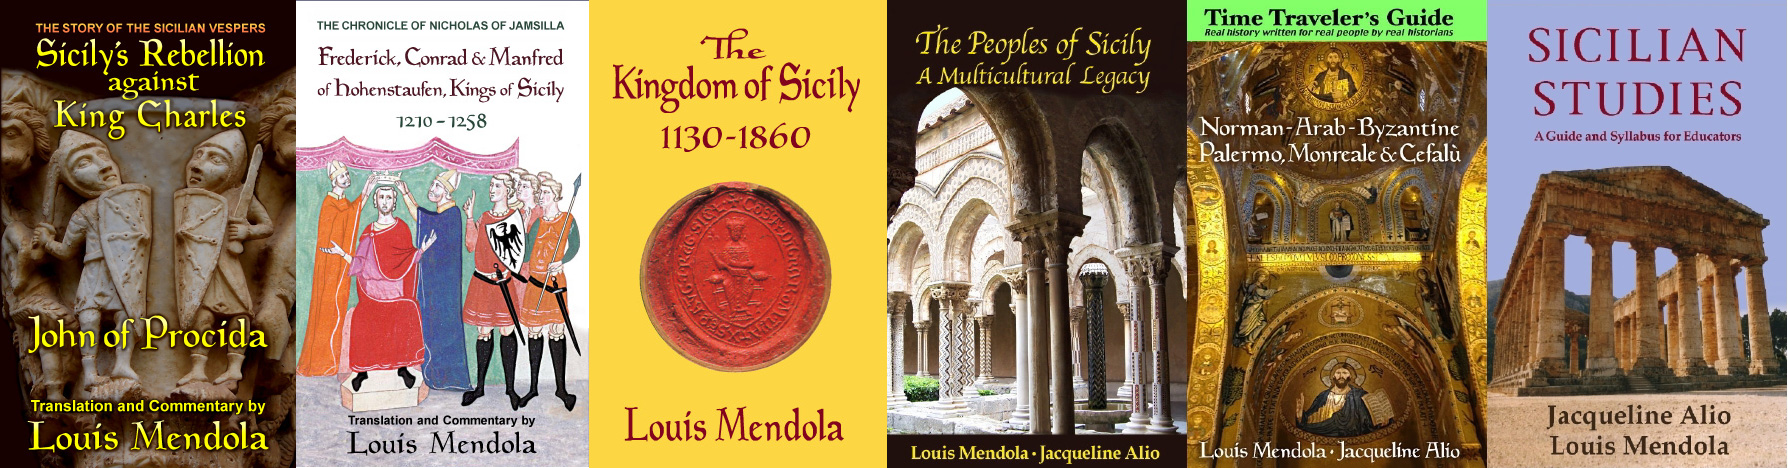 The Kingdom of Sicily 1130-1860: Mendola, Louis: 9780991588671